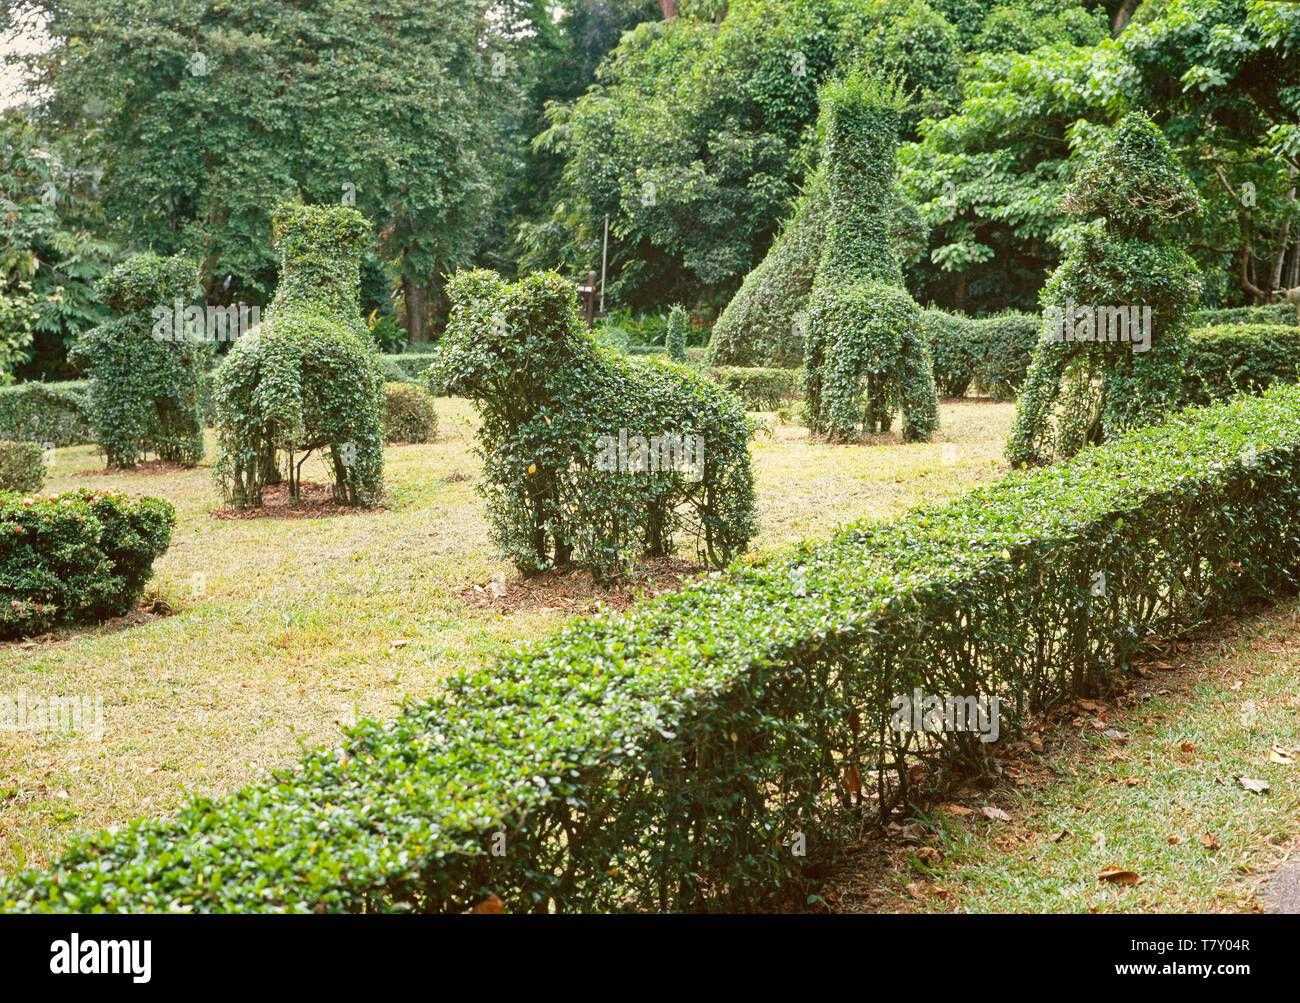 Garden shrub topiary hedge craft, animal shapes. Stock Photo